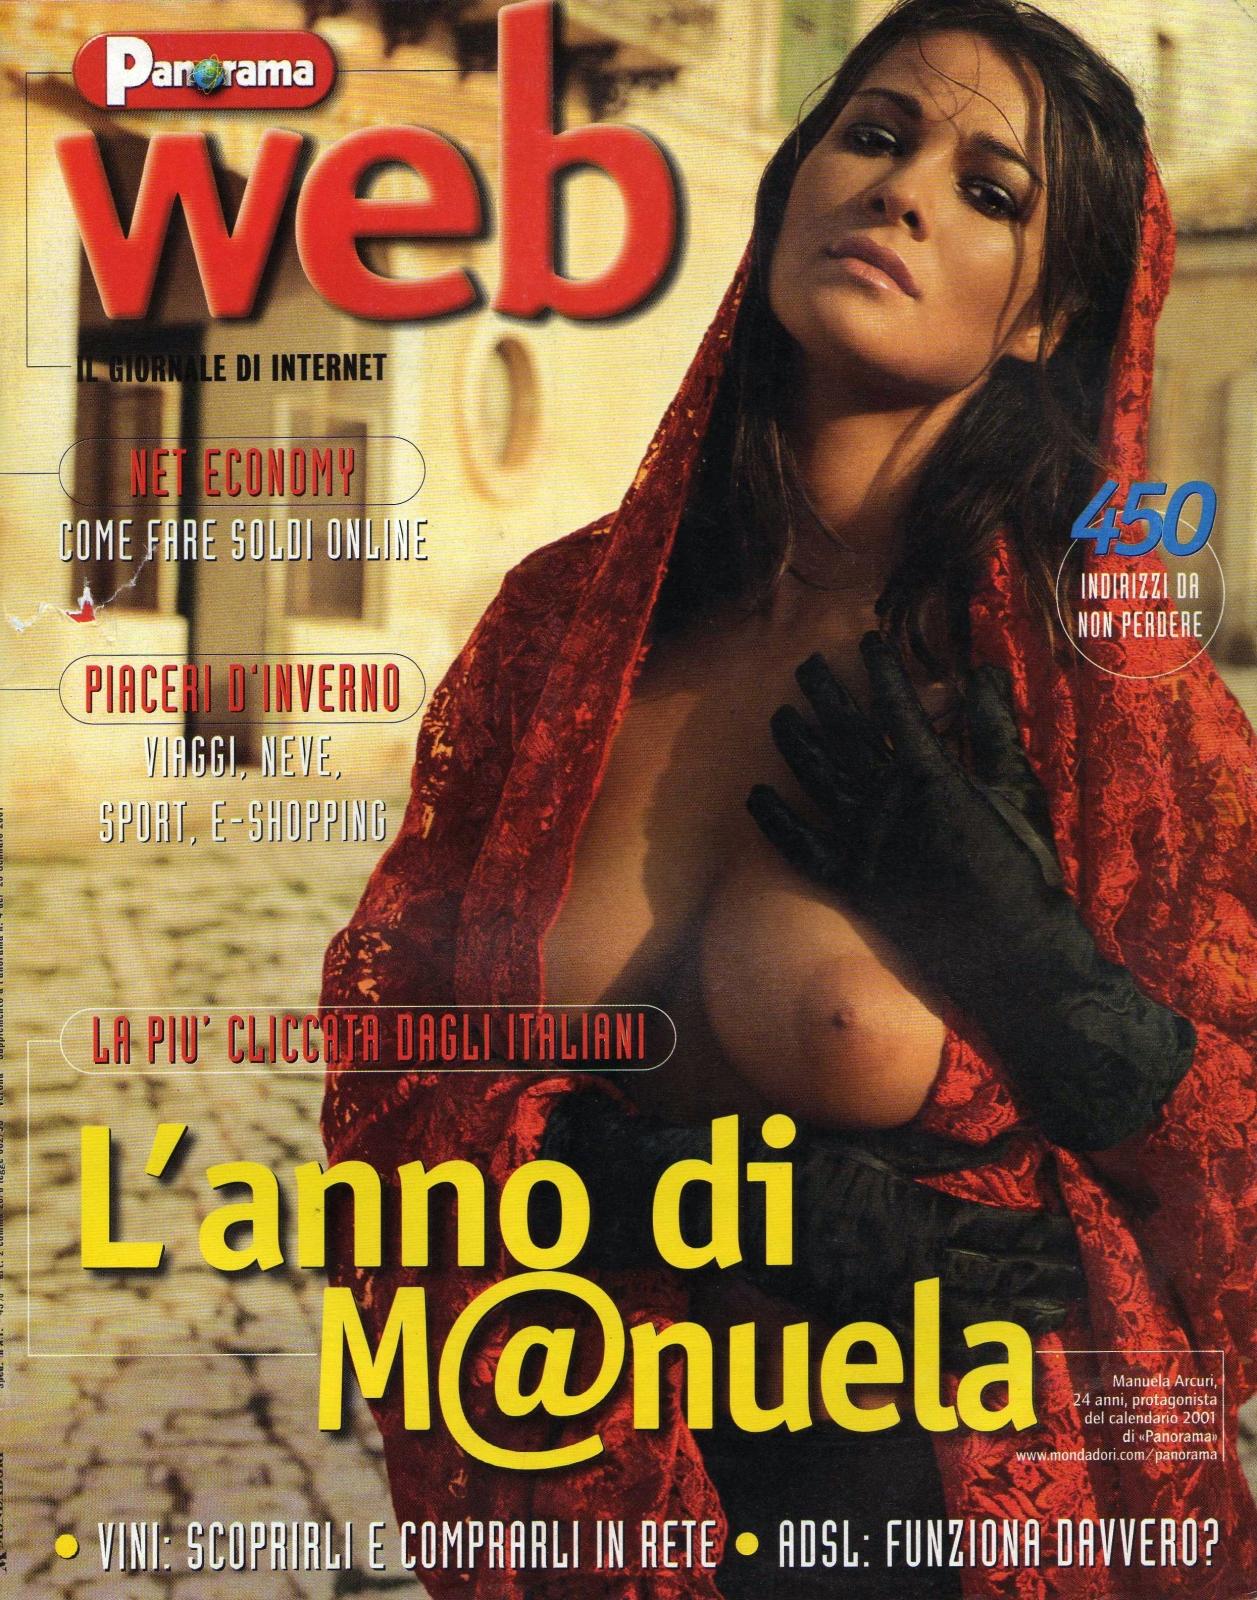 Manuela Arcuri Desnuda En Making Of Calendar Panorama 2001